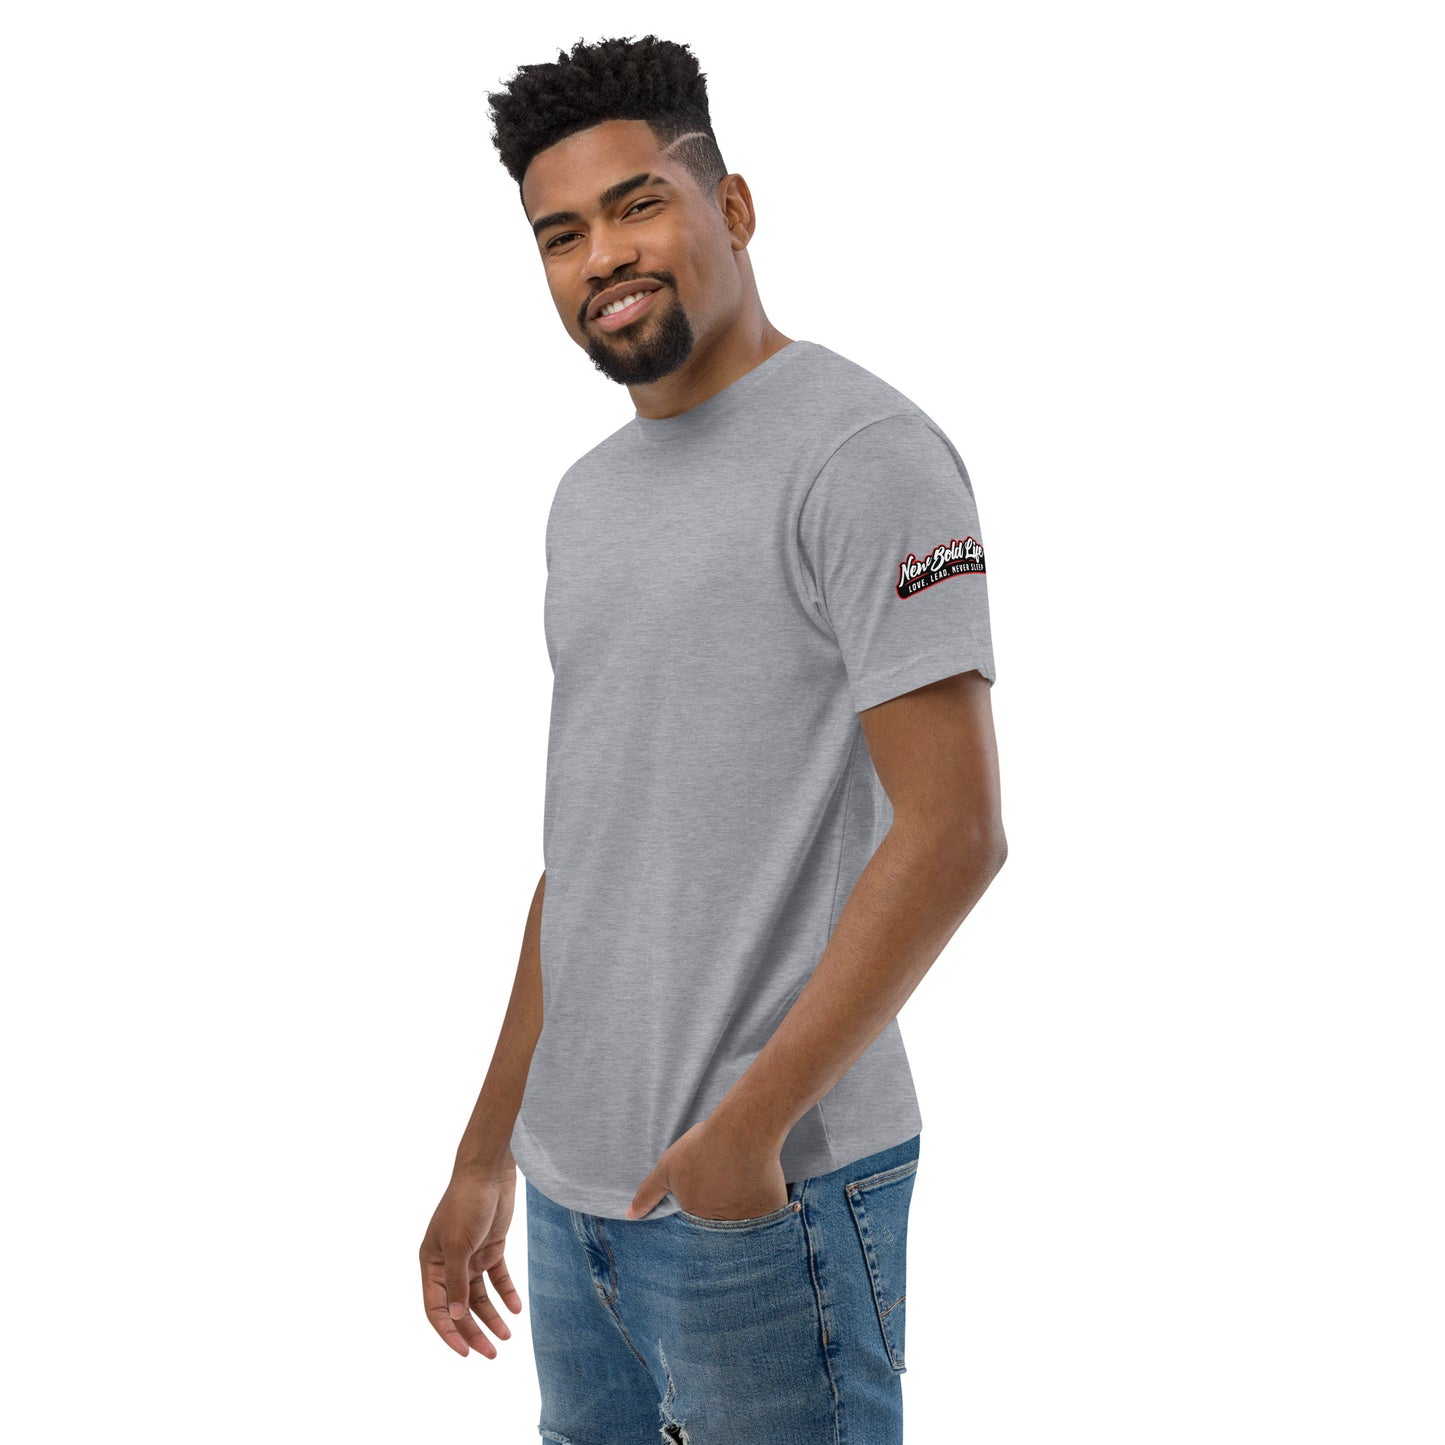 NBL Short Sleeve T-shirt - Men's Clothing